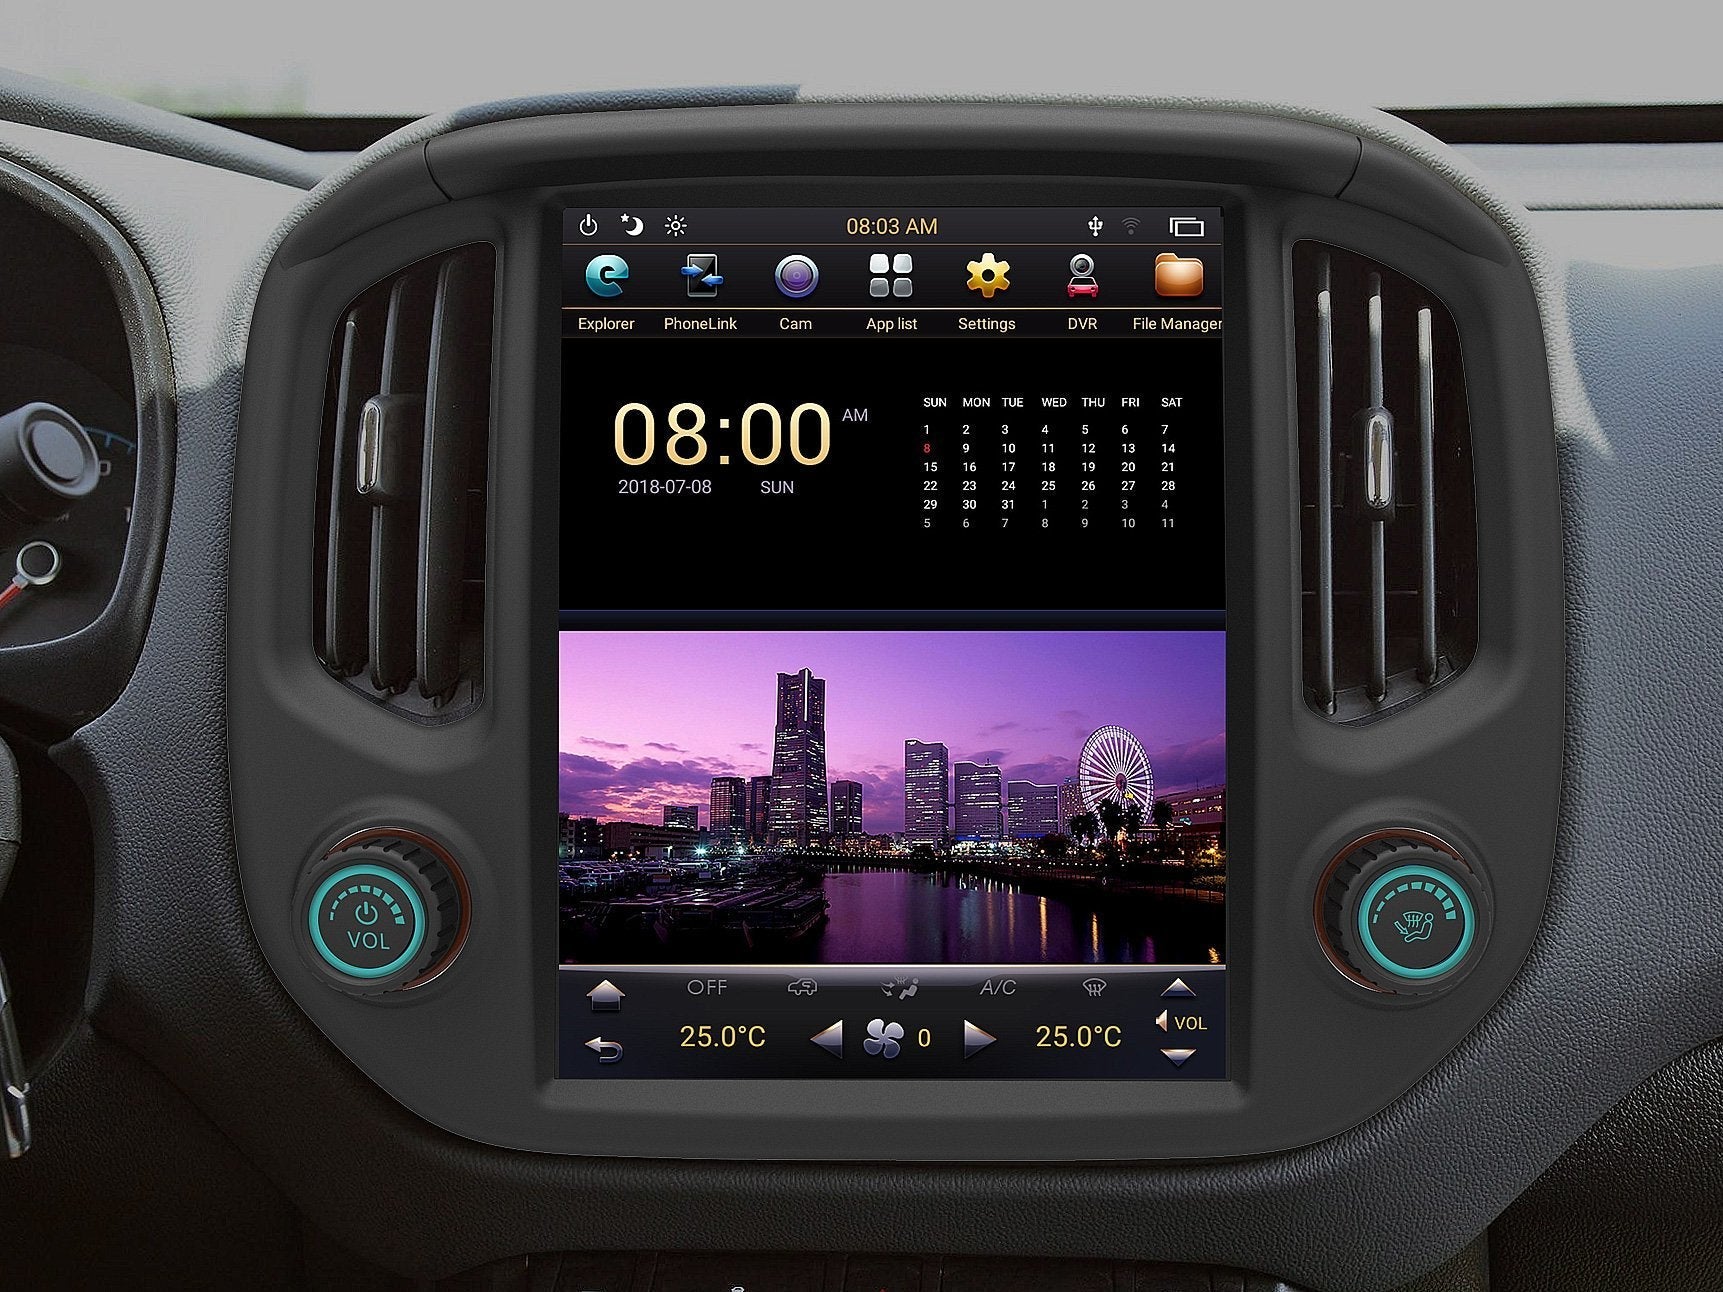 [ Open box ] 12.1" Vertical Screen Android Navigation Radio for Chevrolet Colorado GMC Canyon 2015 - 2018-Phoenix Automotive